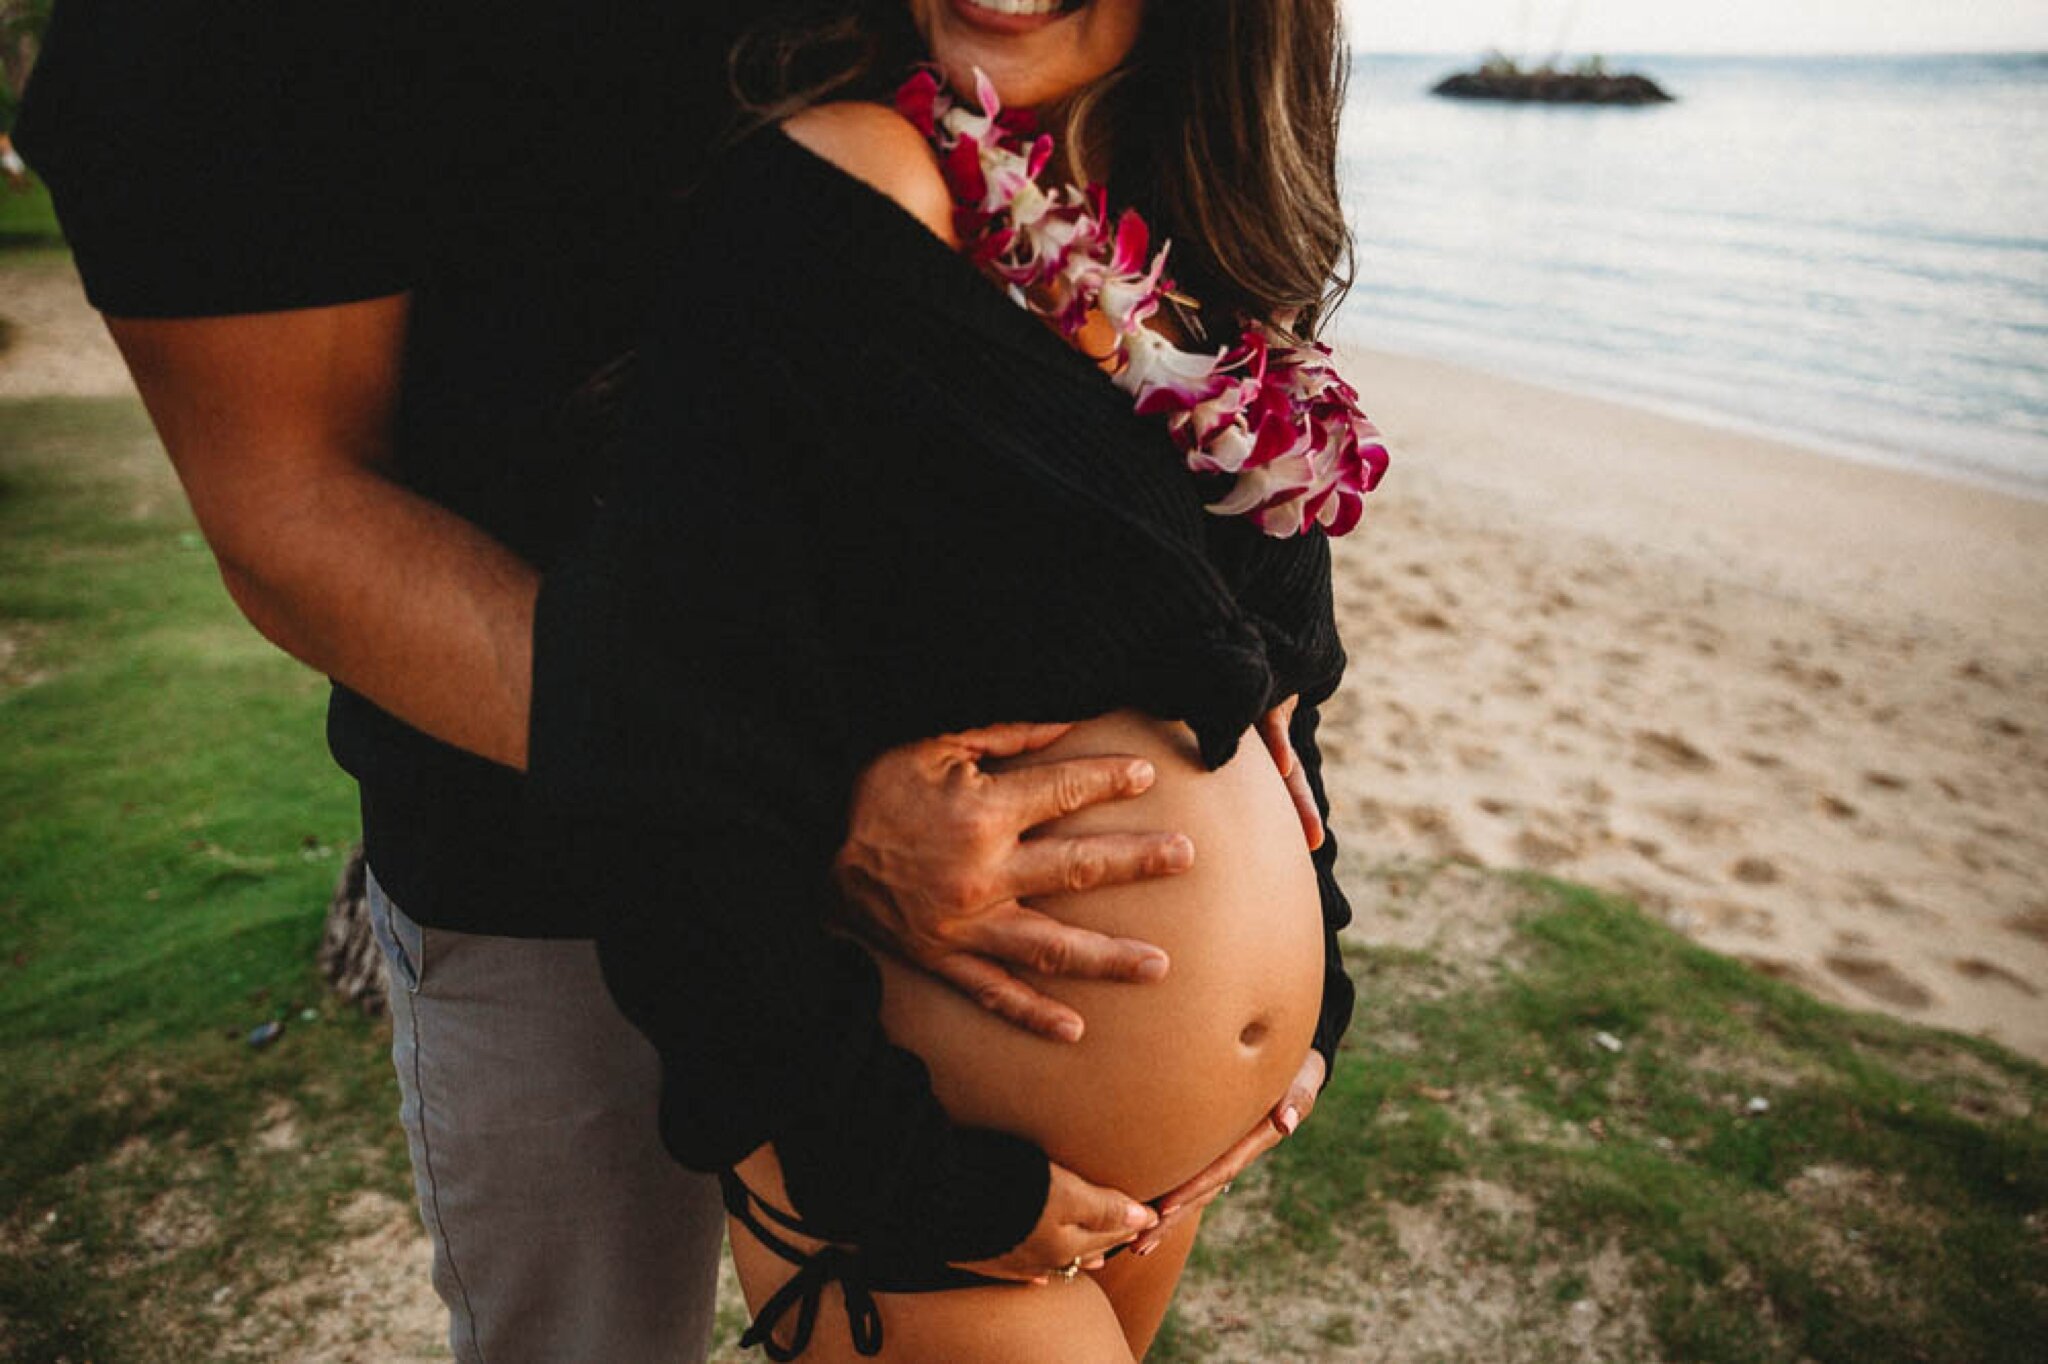 Sunset Maternity Photography Session at Kahala Beach in Oahu - Hawaii Family Photographer - Johanna Dye 18.jpg